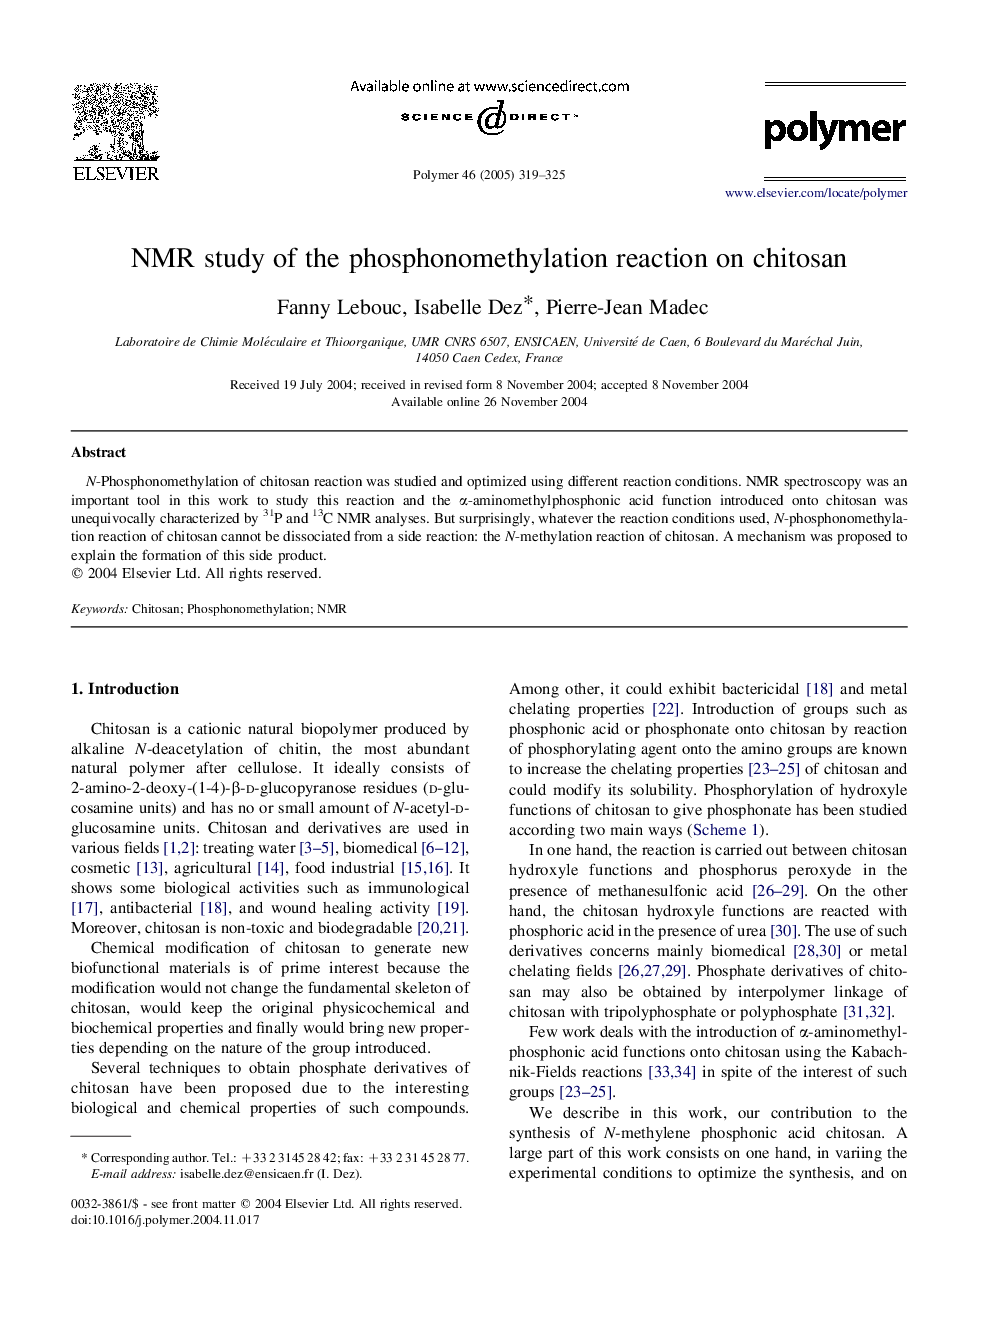 NMR study of the phosphonomethylation reaction on chitosan